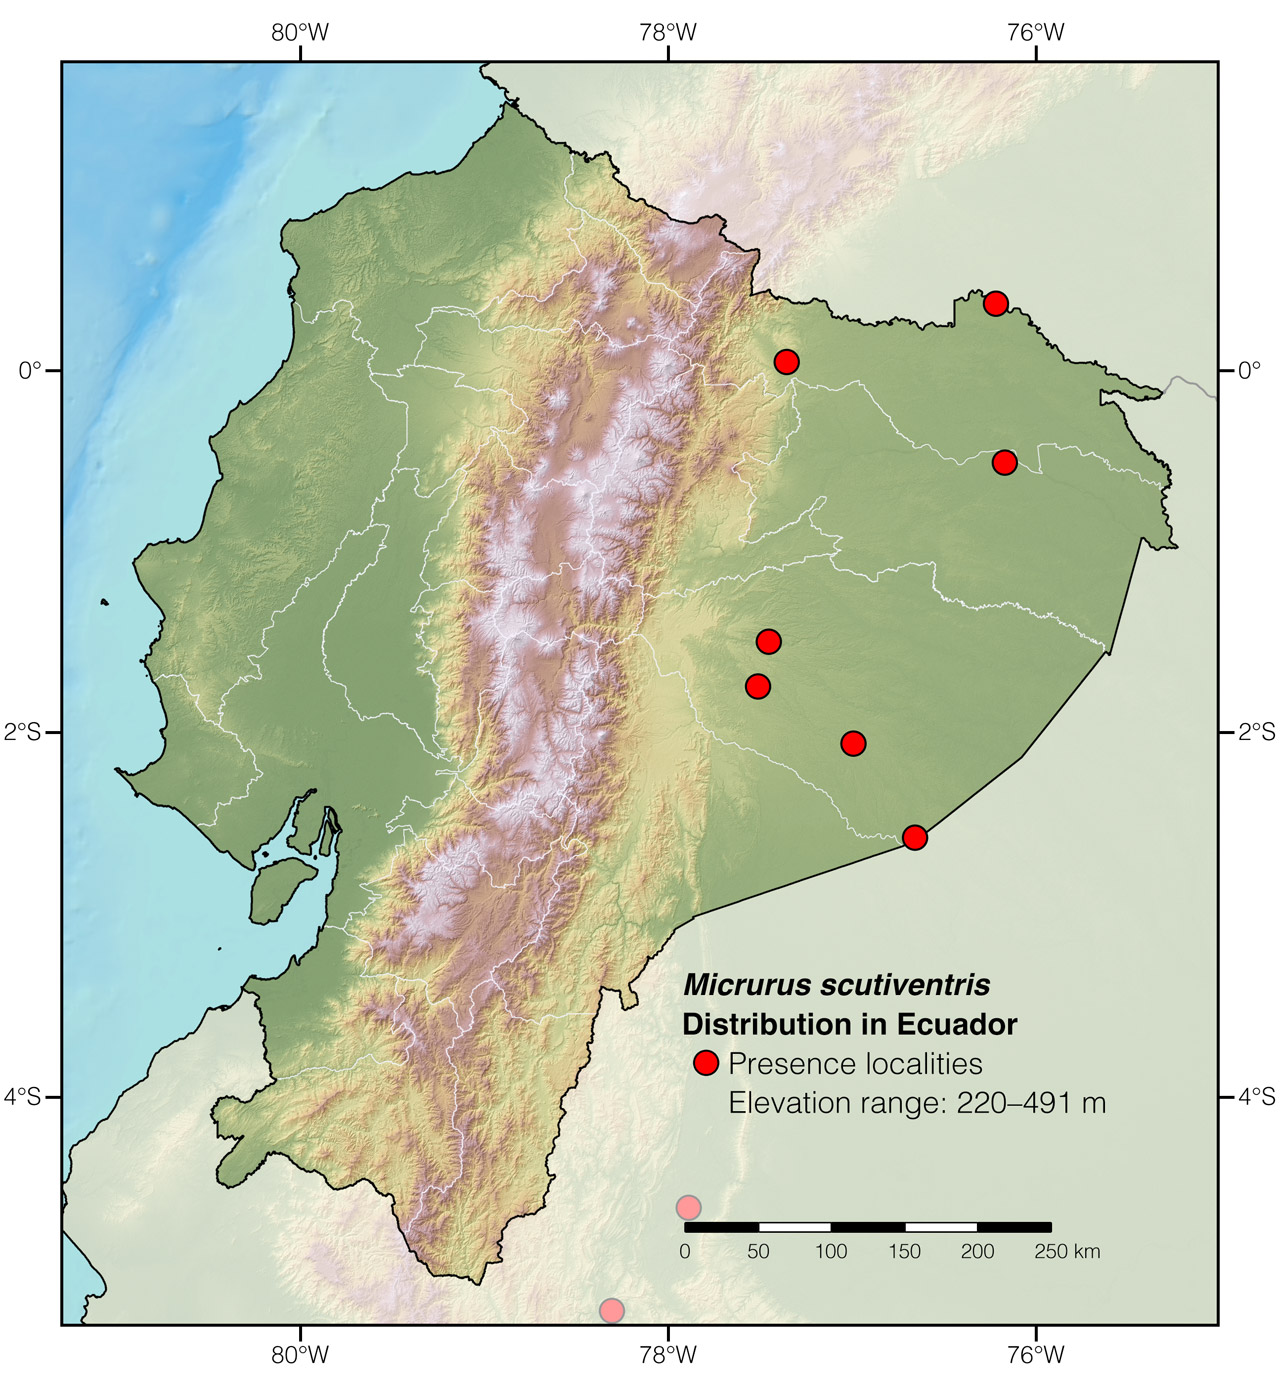 Distribution of Micrurus scutiventris in Ecuador